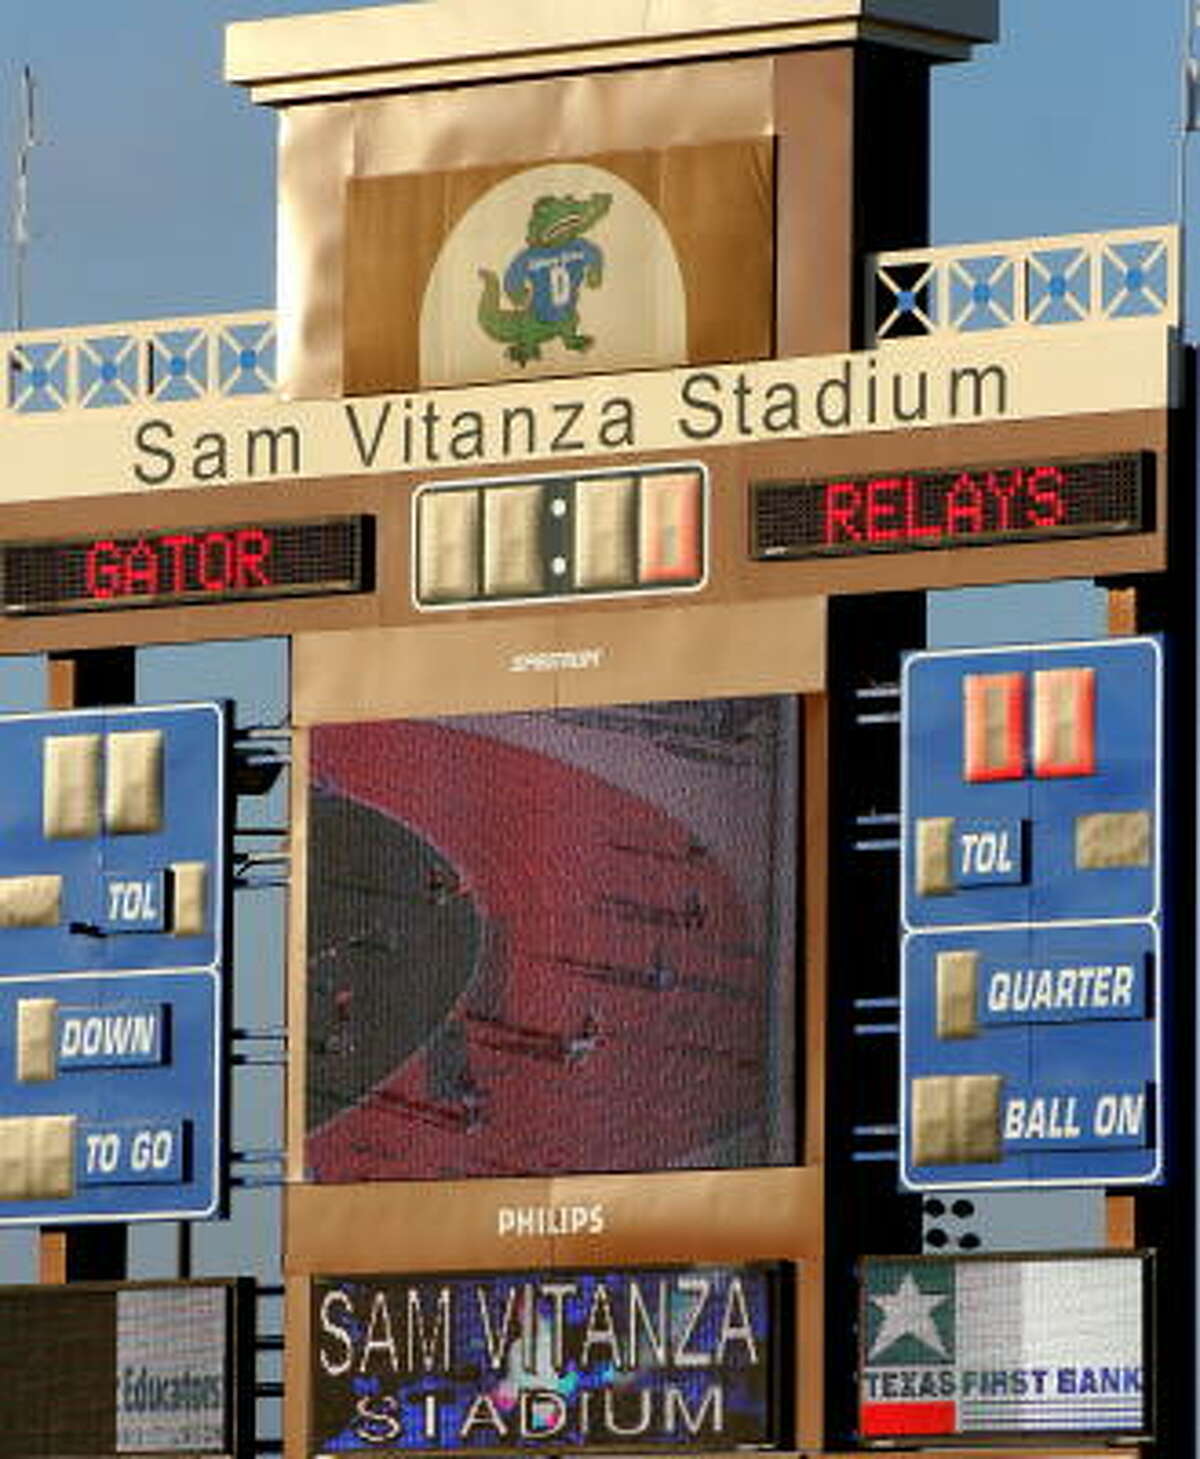 The Dickinson relays were held at Sam Vitanza Stadium.